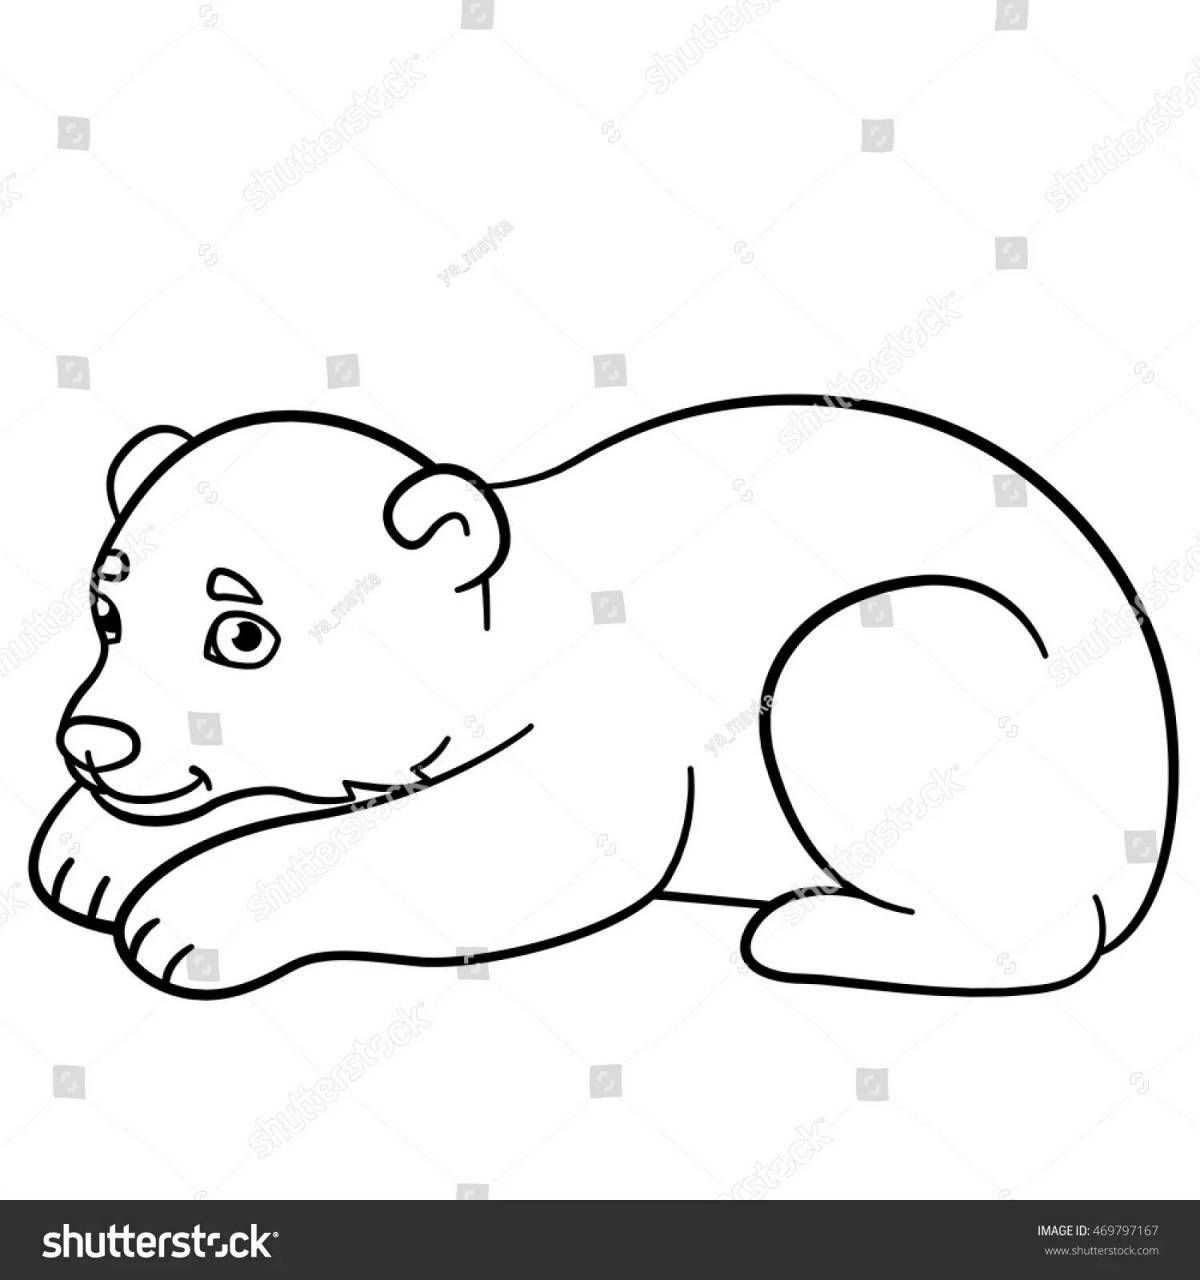 Fancy bear in a den coloring page